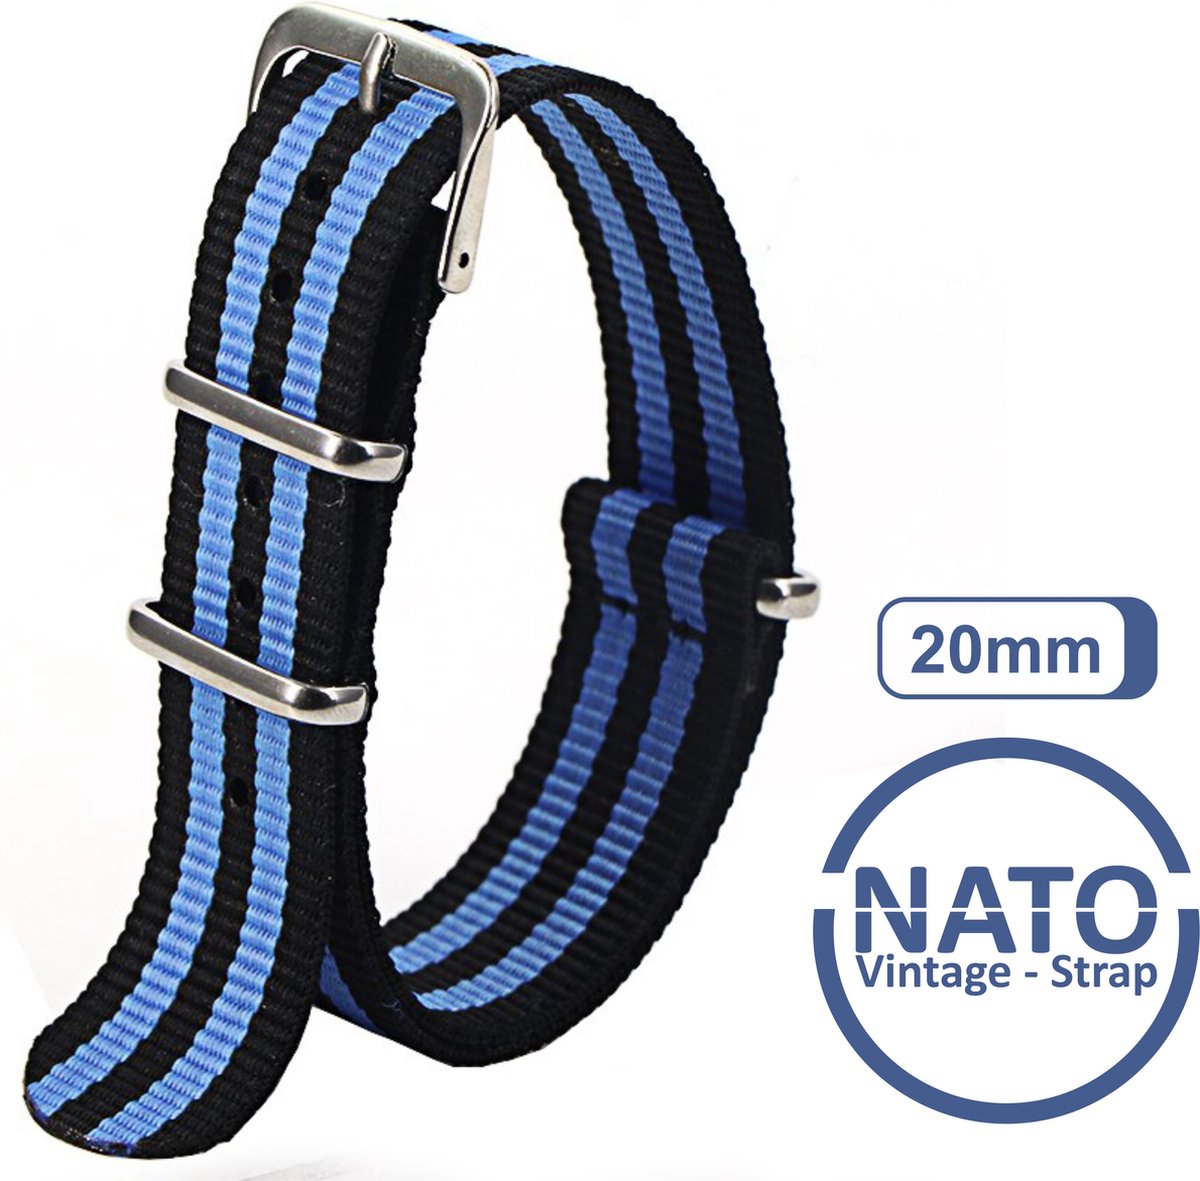 20mm Nato Strap Zwart Blauw streep - Vintage James Bond - Nato Strap collectie - Mannen - Horlogebanden gestreeept - 20 mm bandbreedte voor oa. Seiko Rolex Omega Casio en Citizen